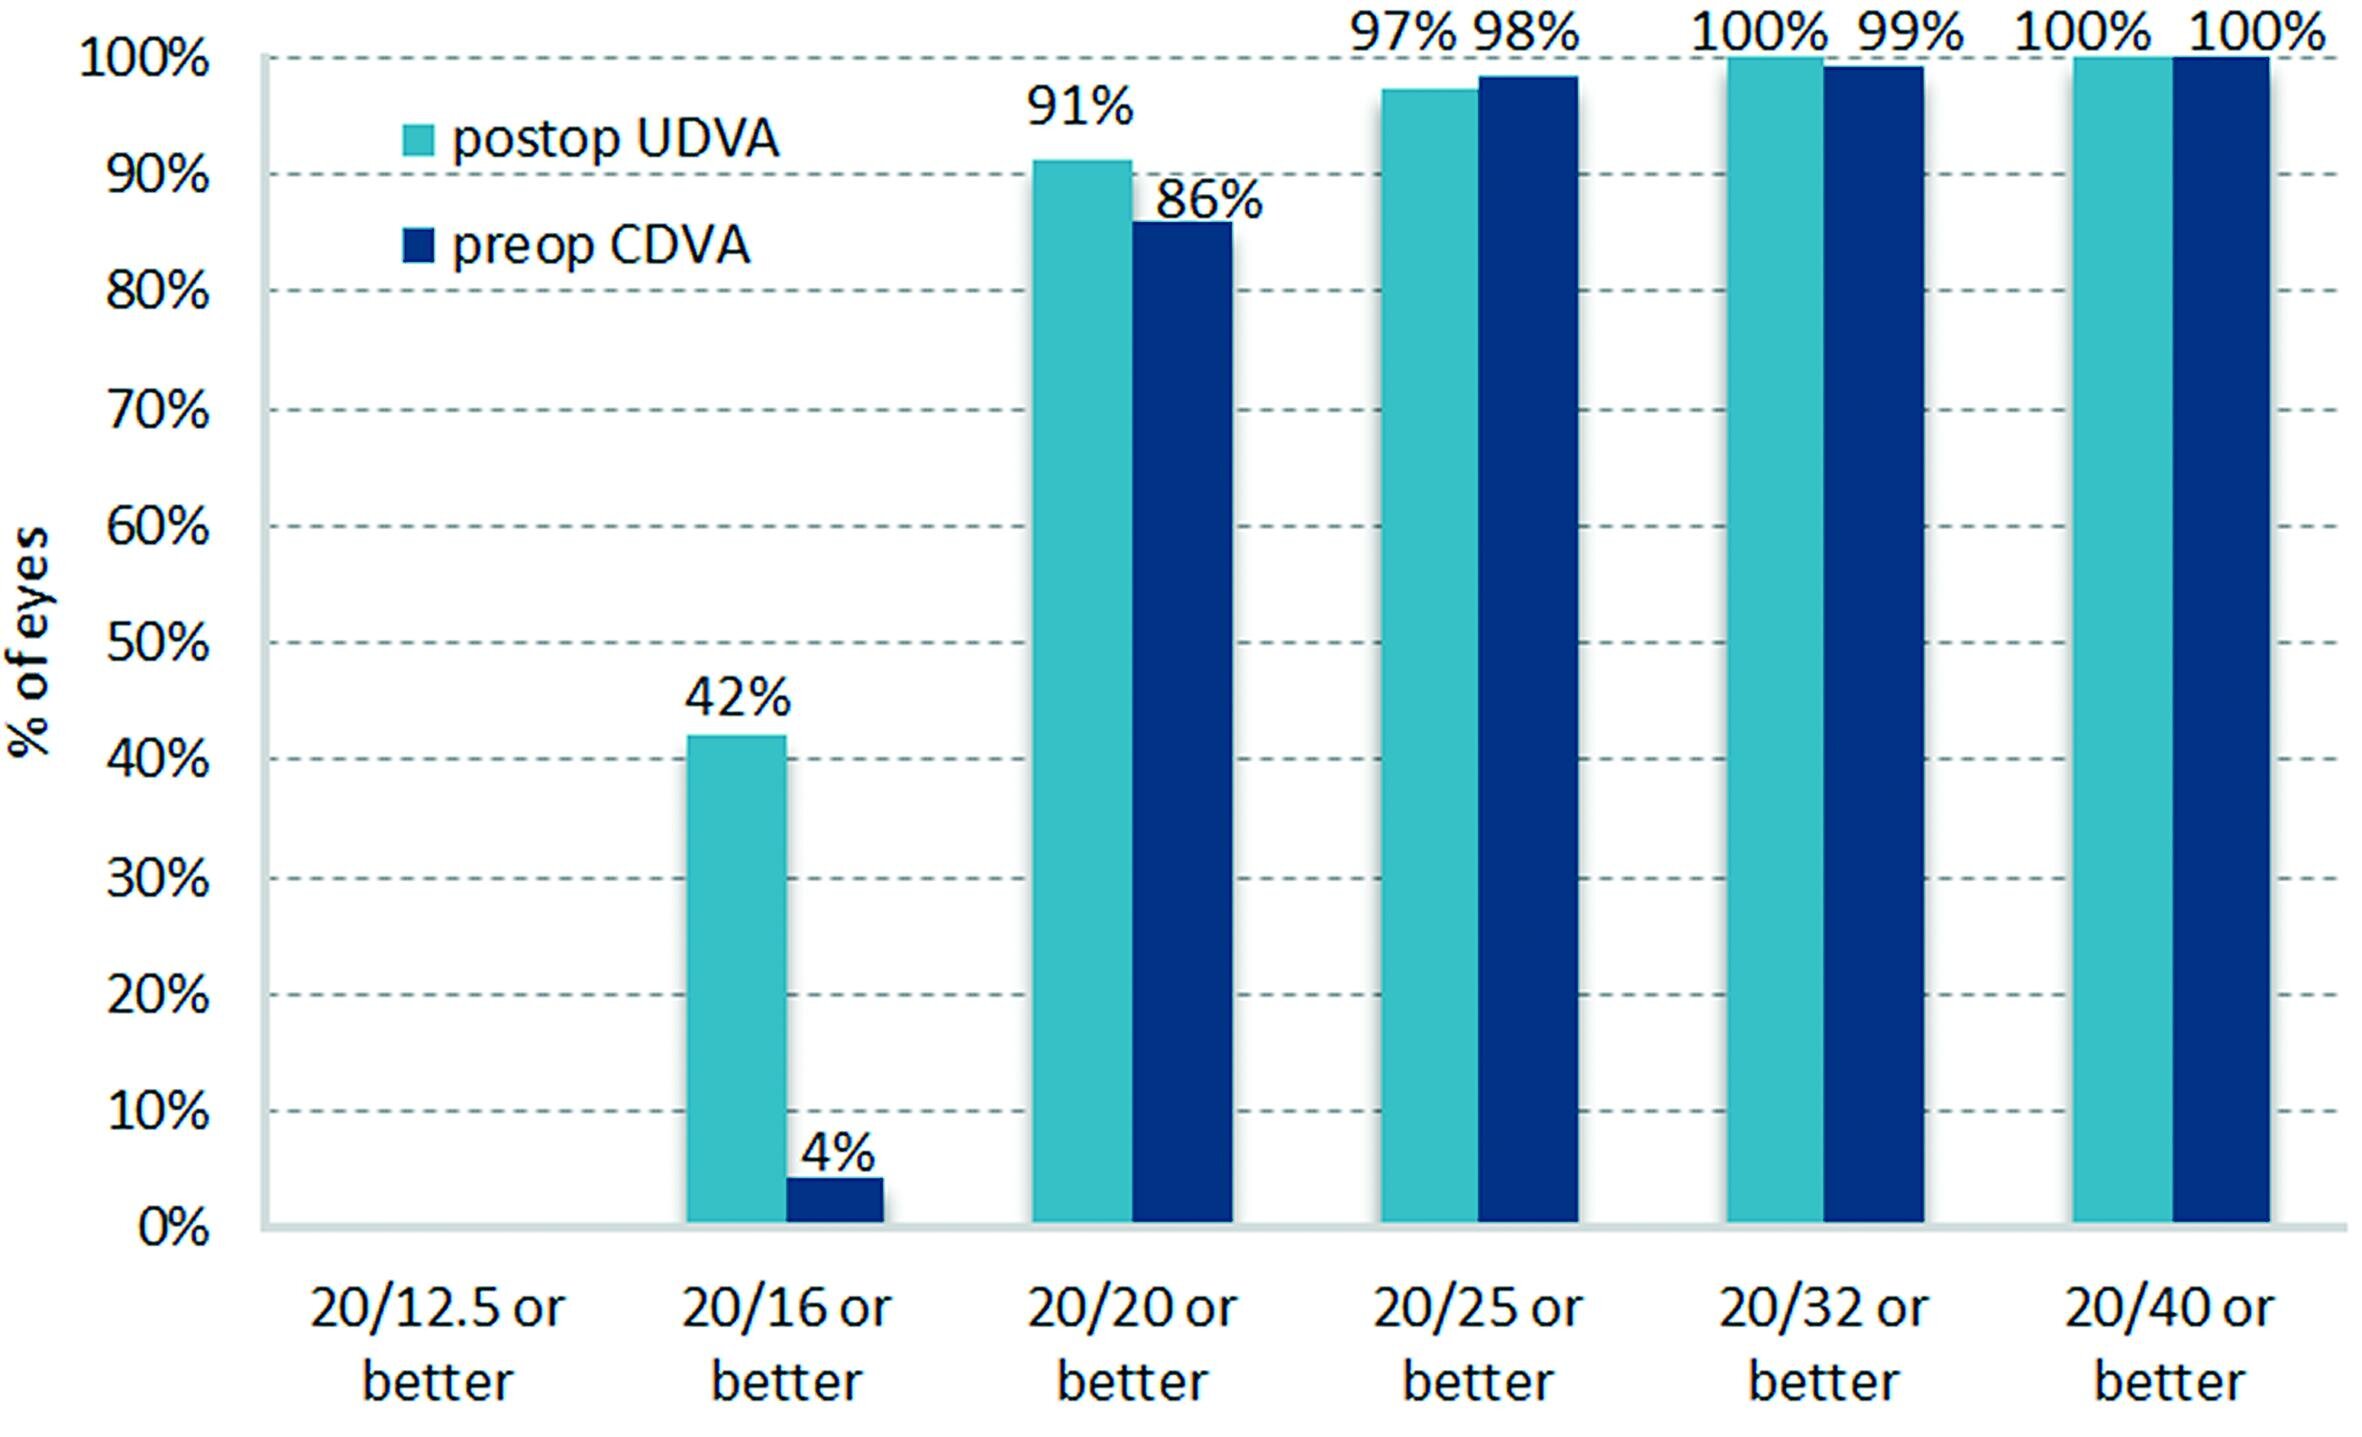 Preoperative BSCVA versus postoperative UCVA in percent, study of 114 eyes